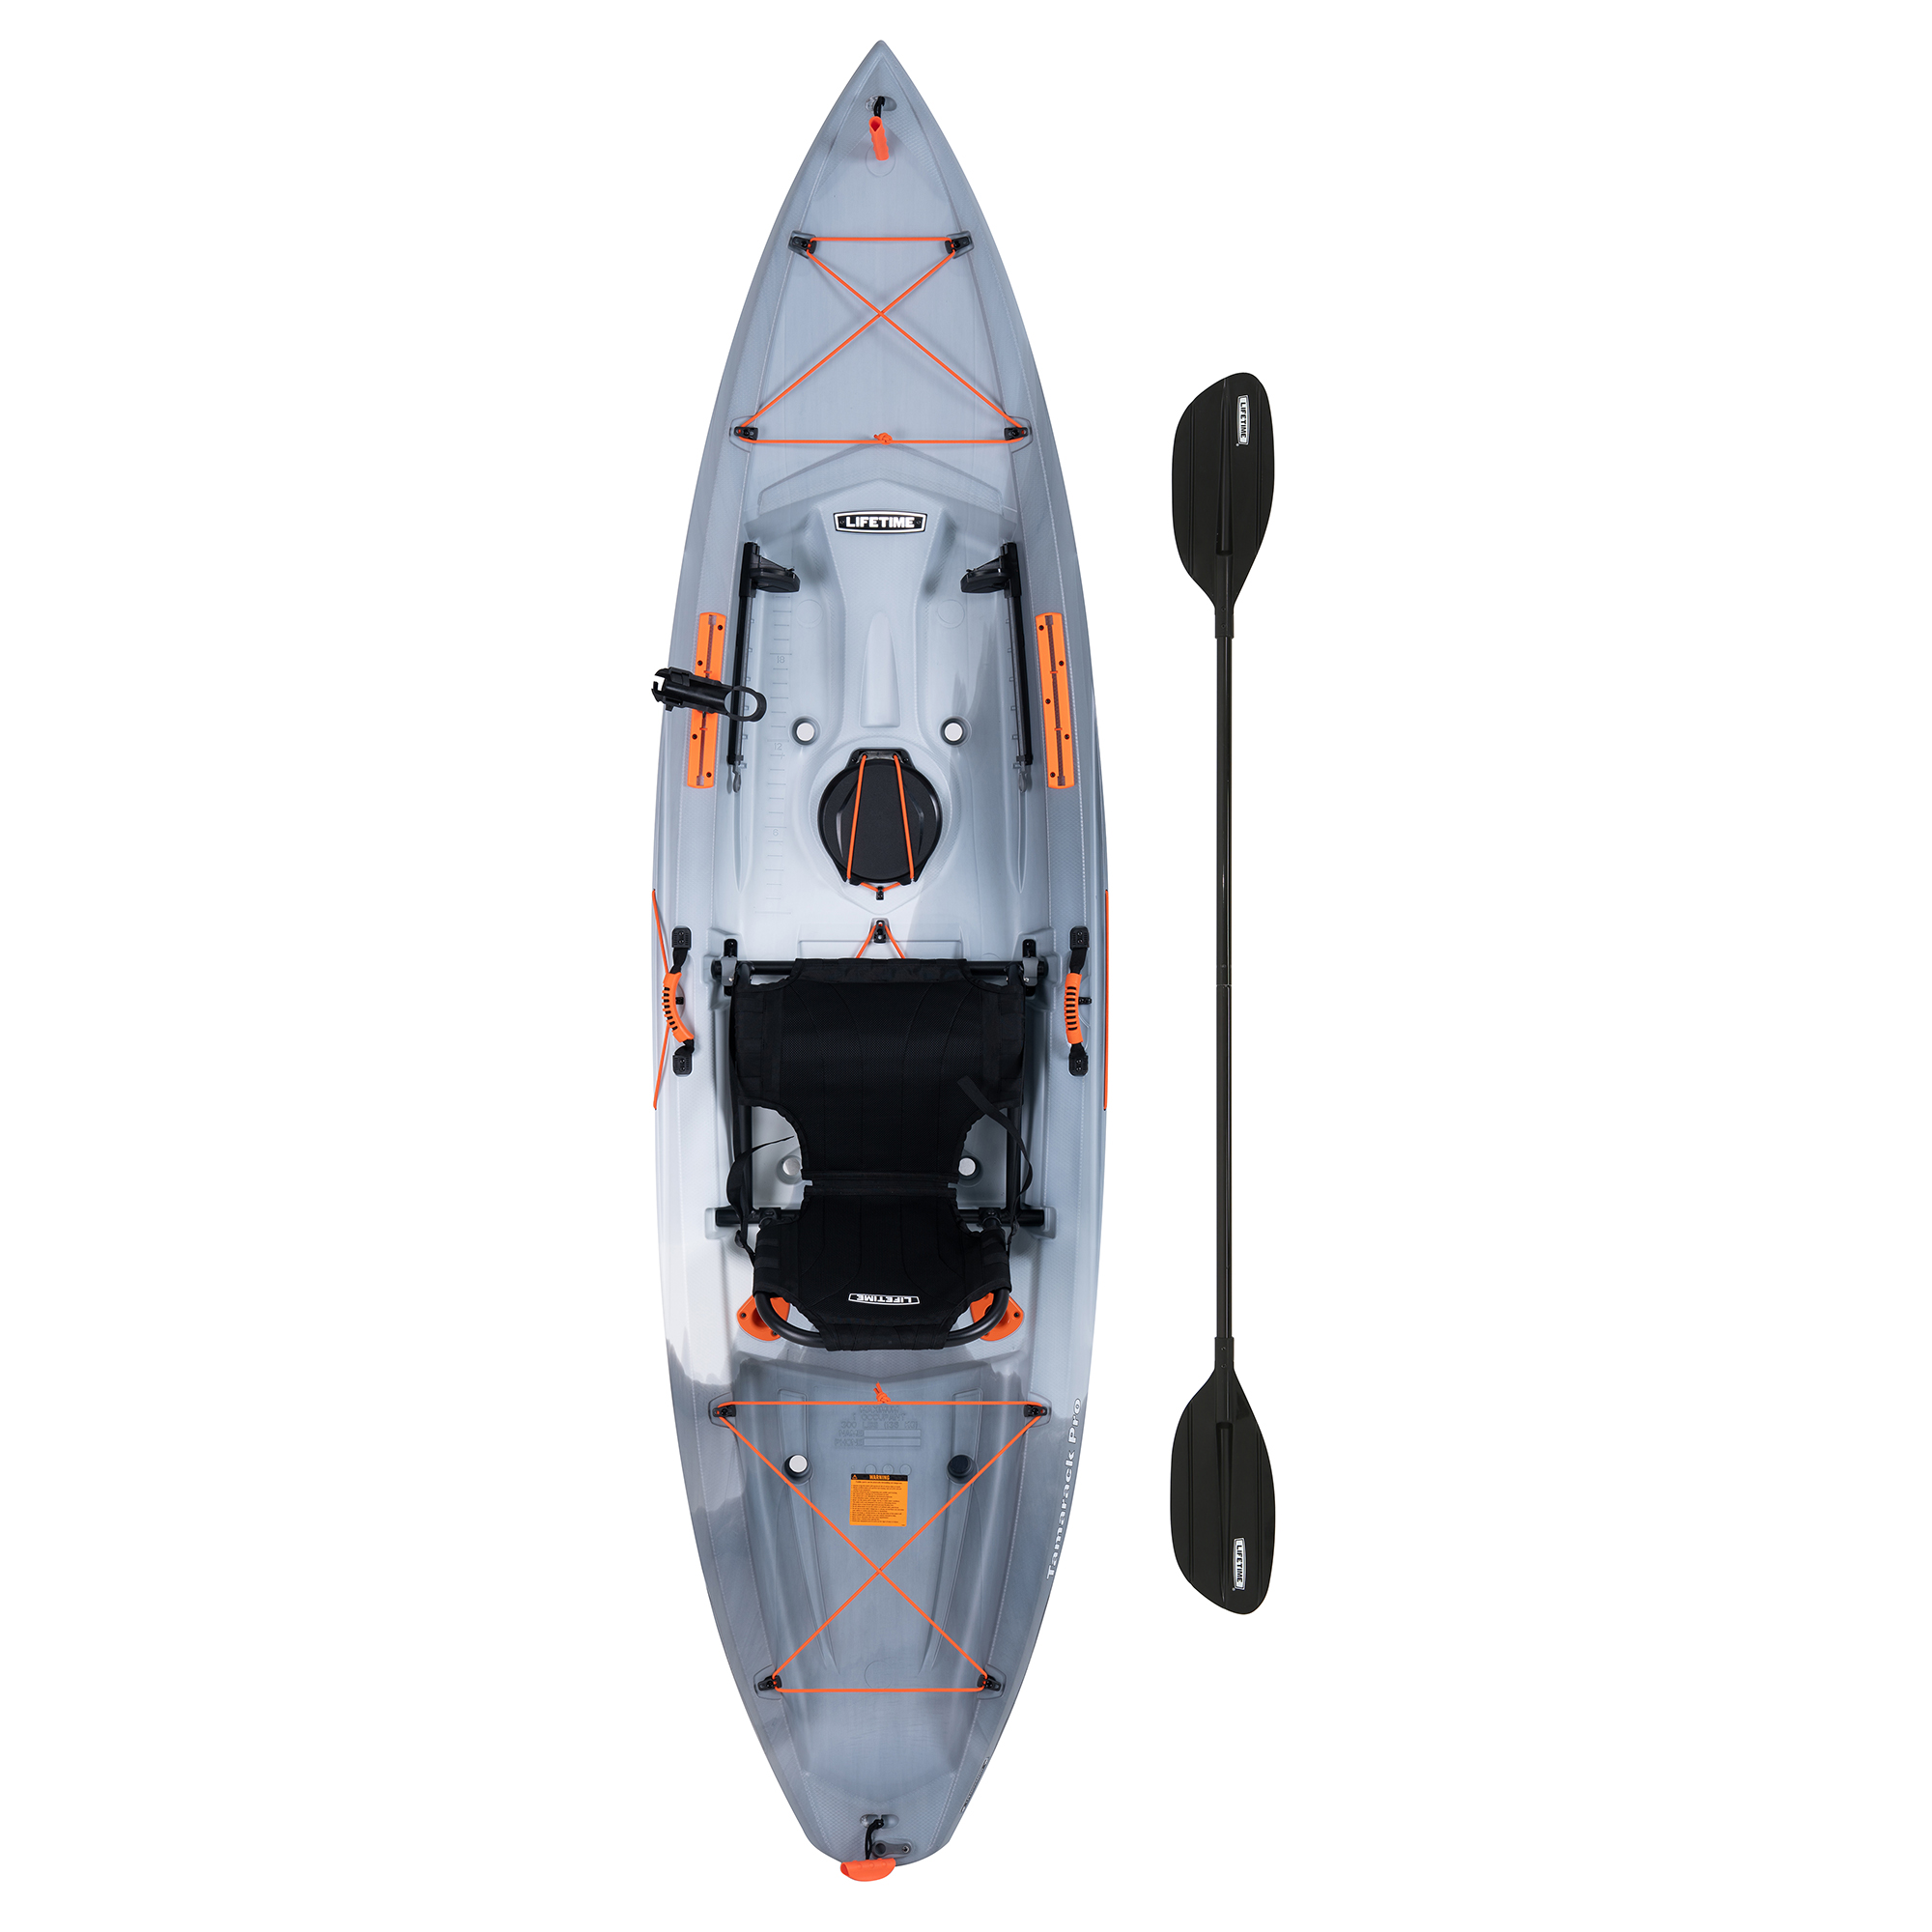 Lifetime Tamarack Pro Kayak $375 price matched in app YMMV